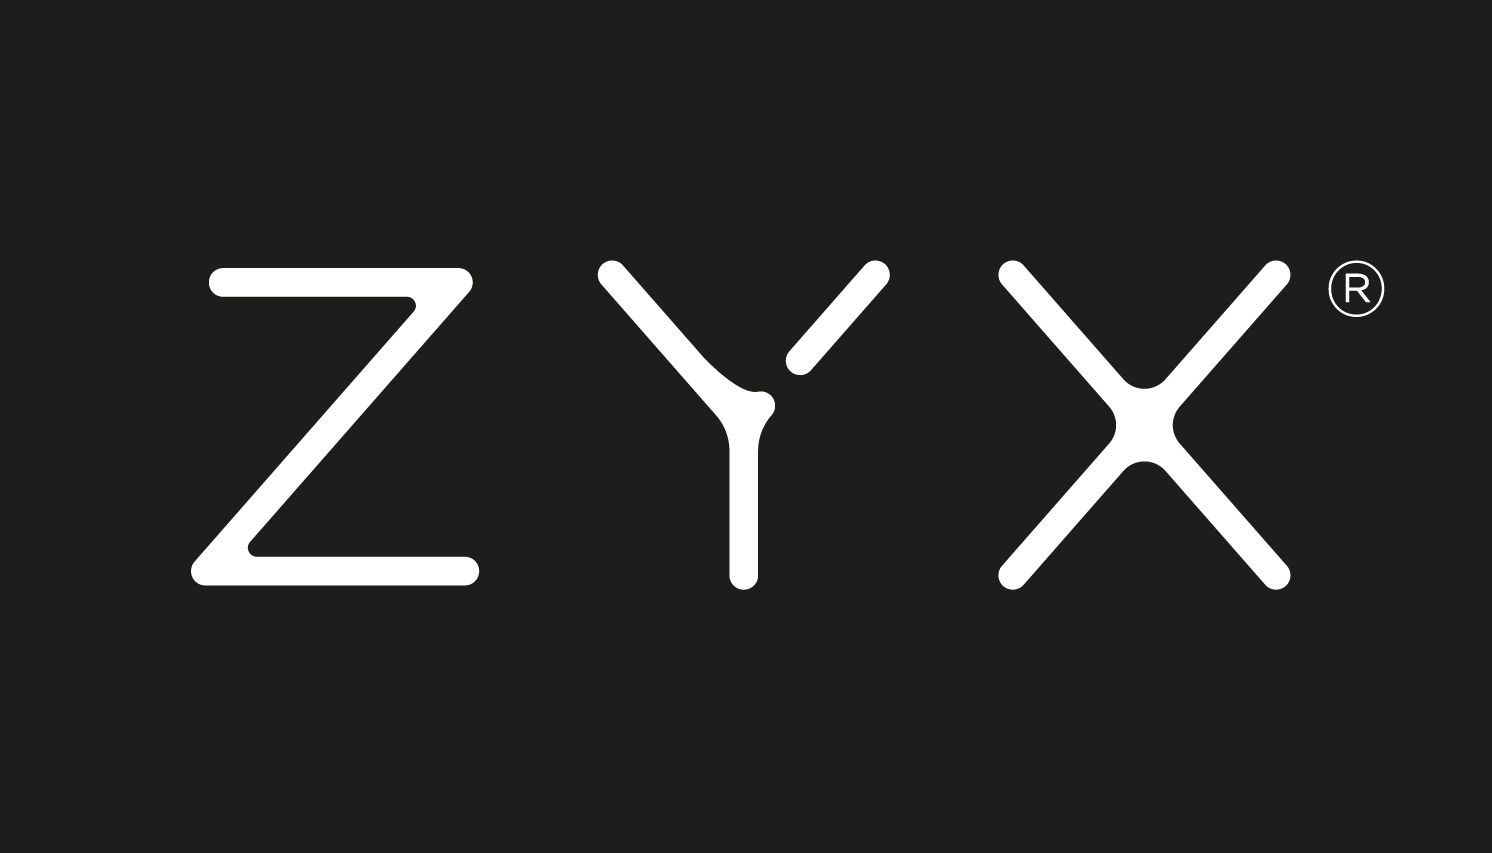 Zyx blanco fondo negro-01.jpg